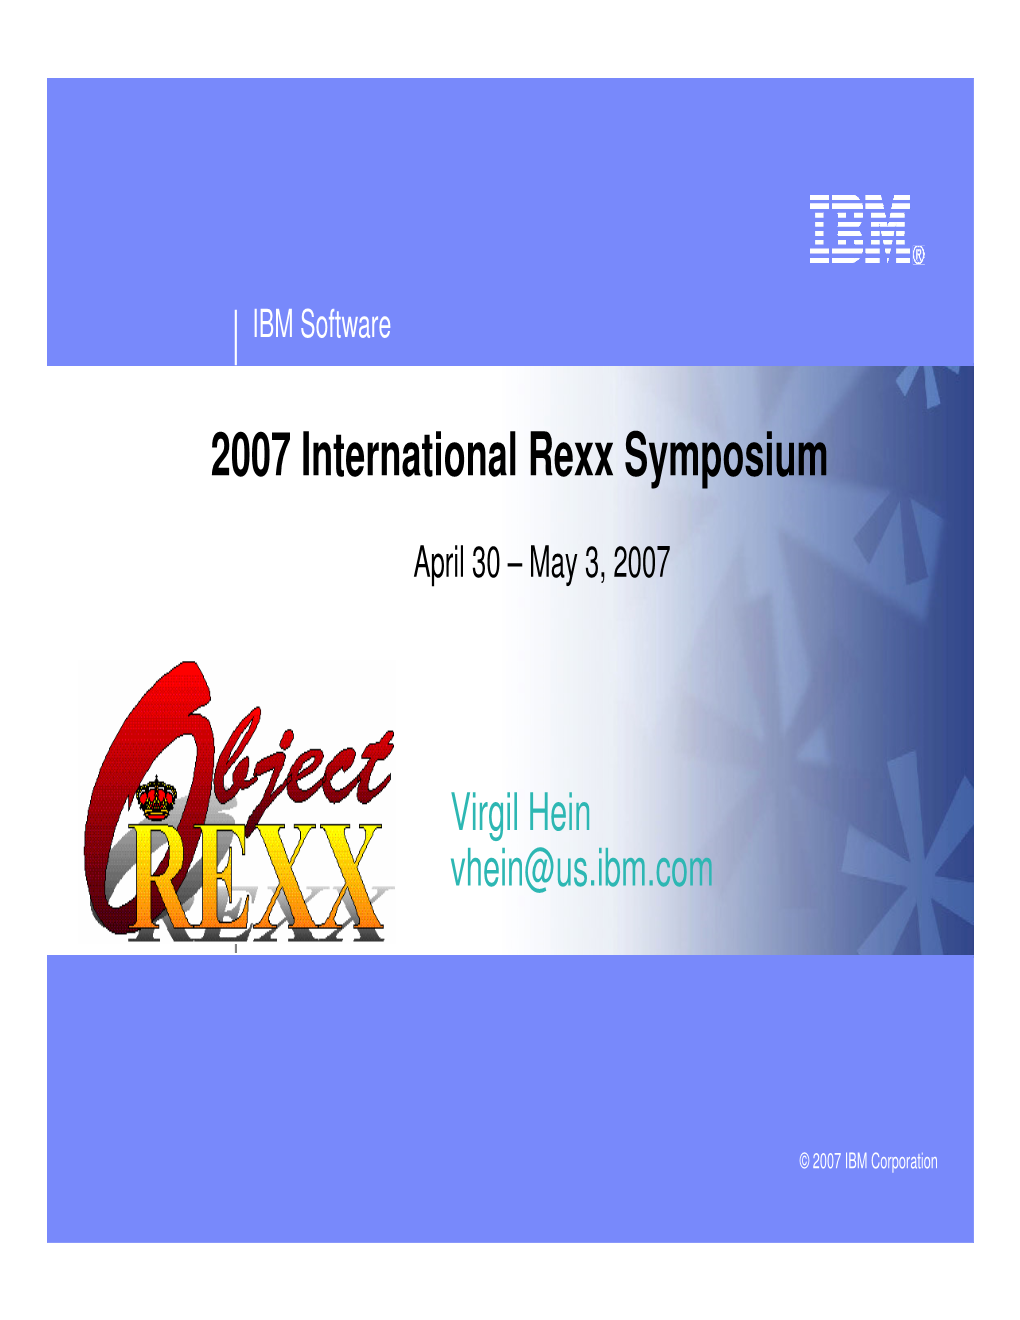 2007 International Rexx Symposium